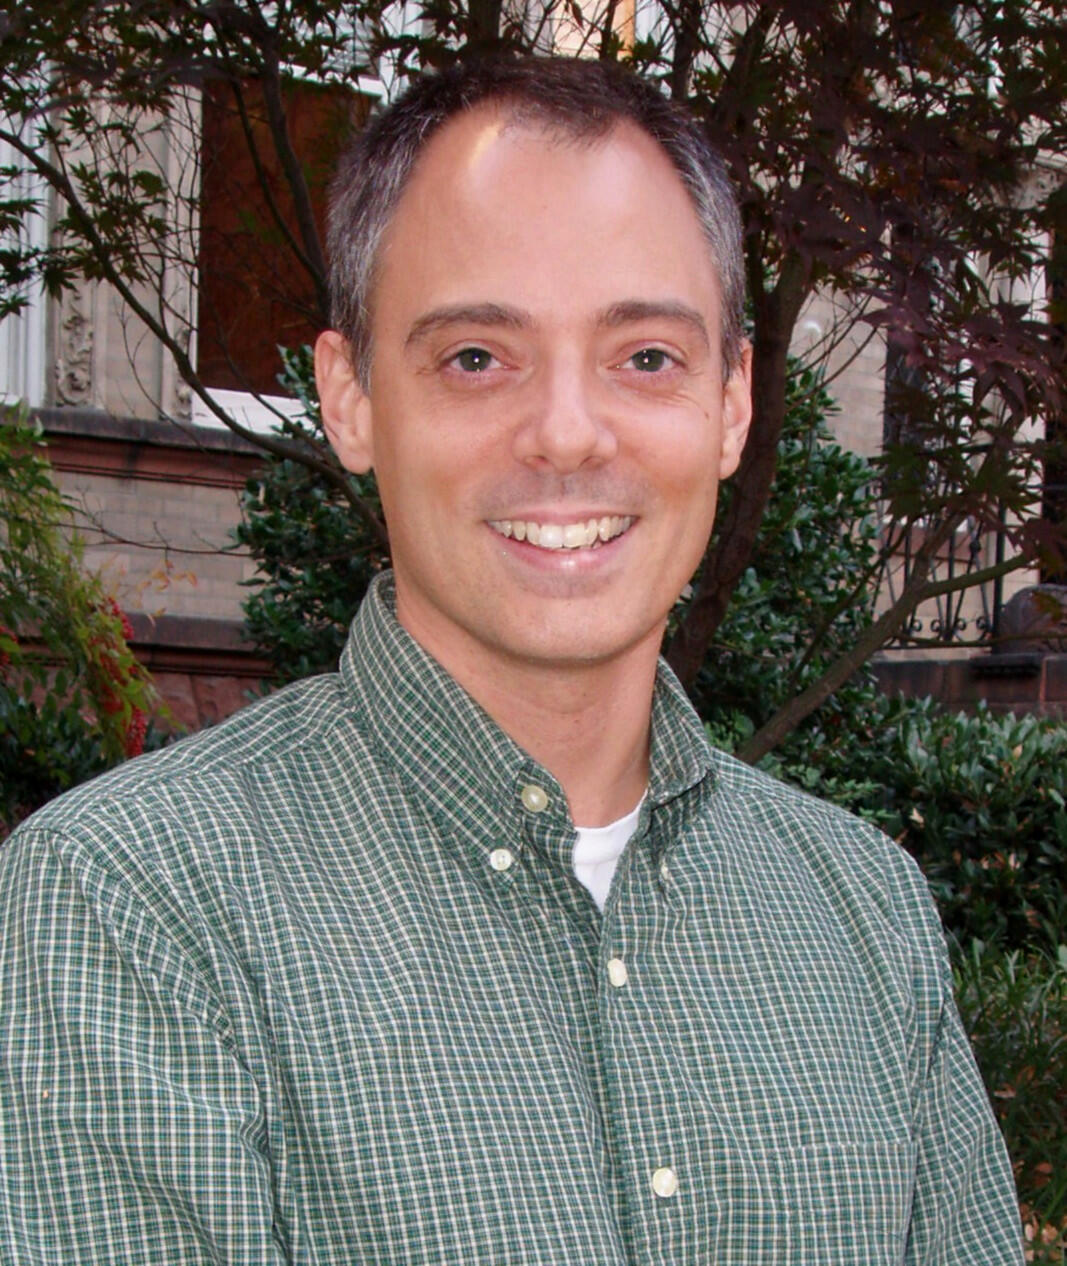 Michael A. Southam-Gerow, Ph.D.